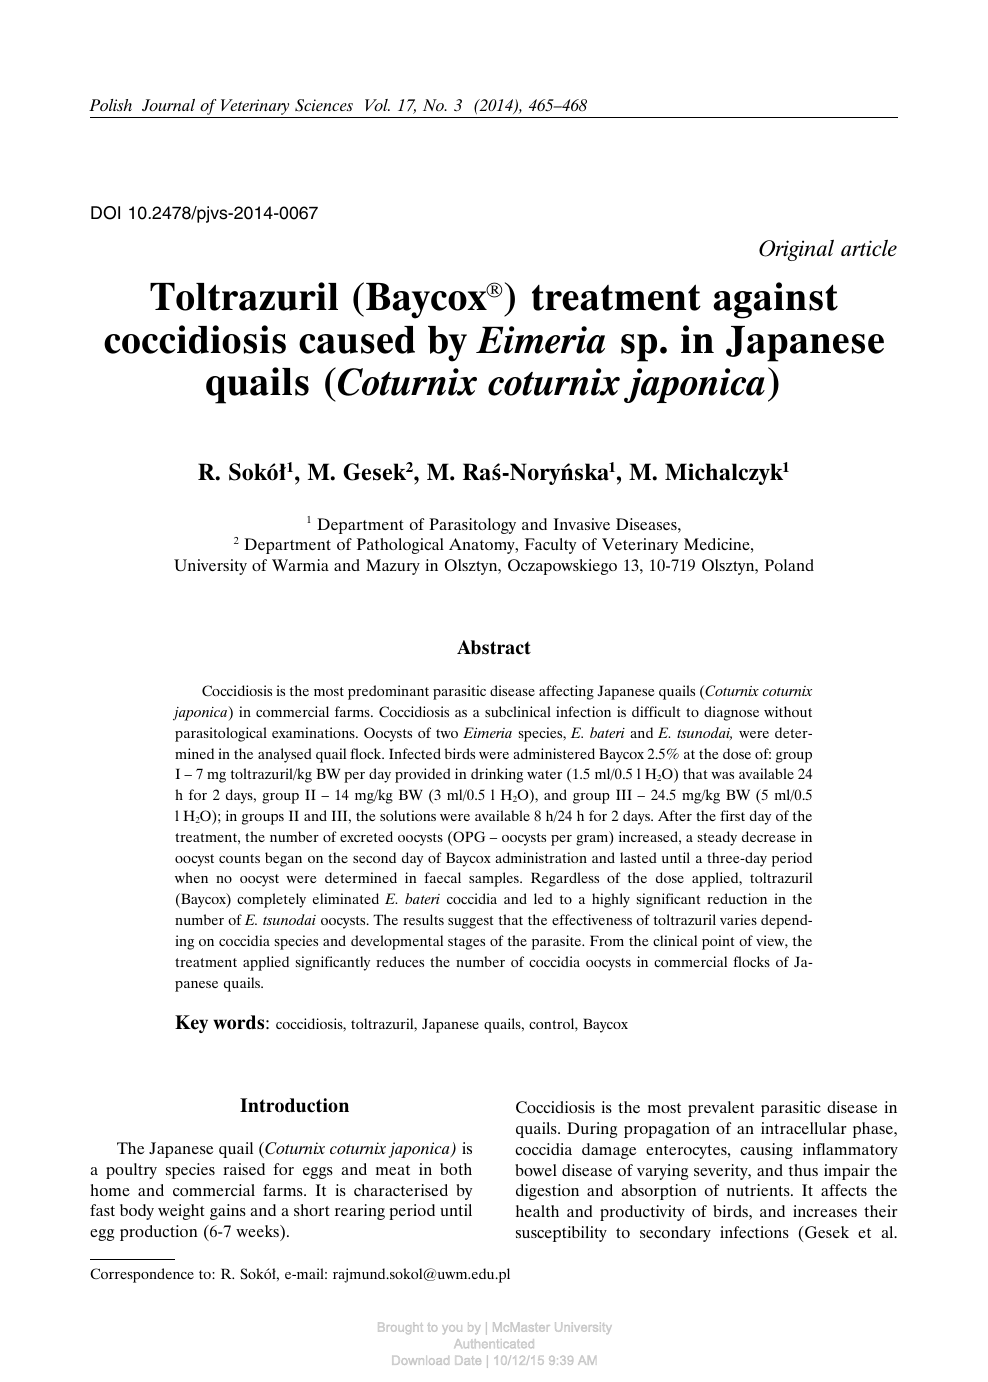 Treatment against coccidiosis, Benefits Of Toltrazuril, Toltrazuril